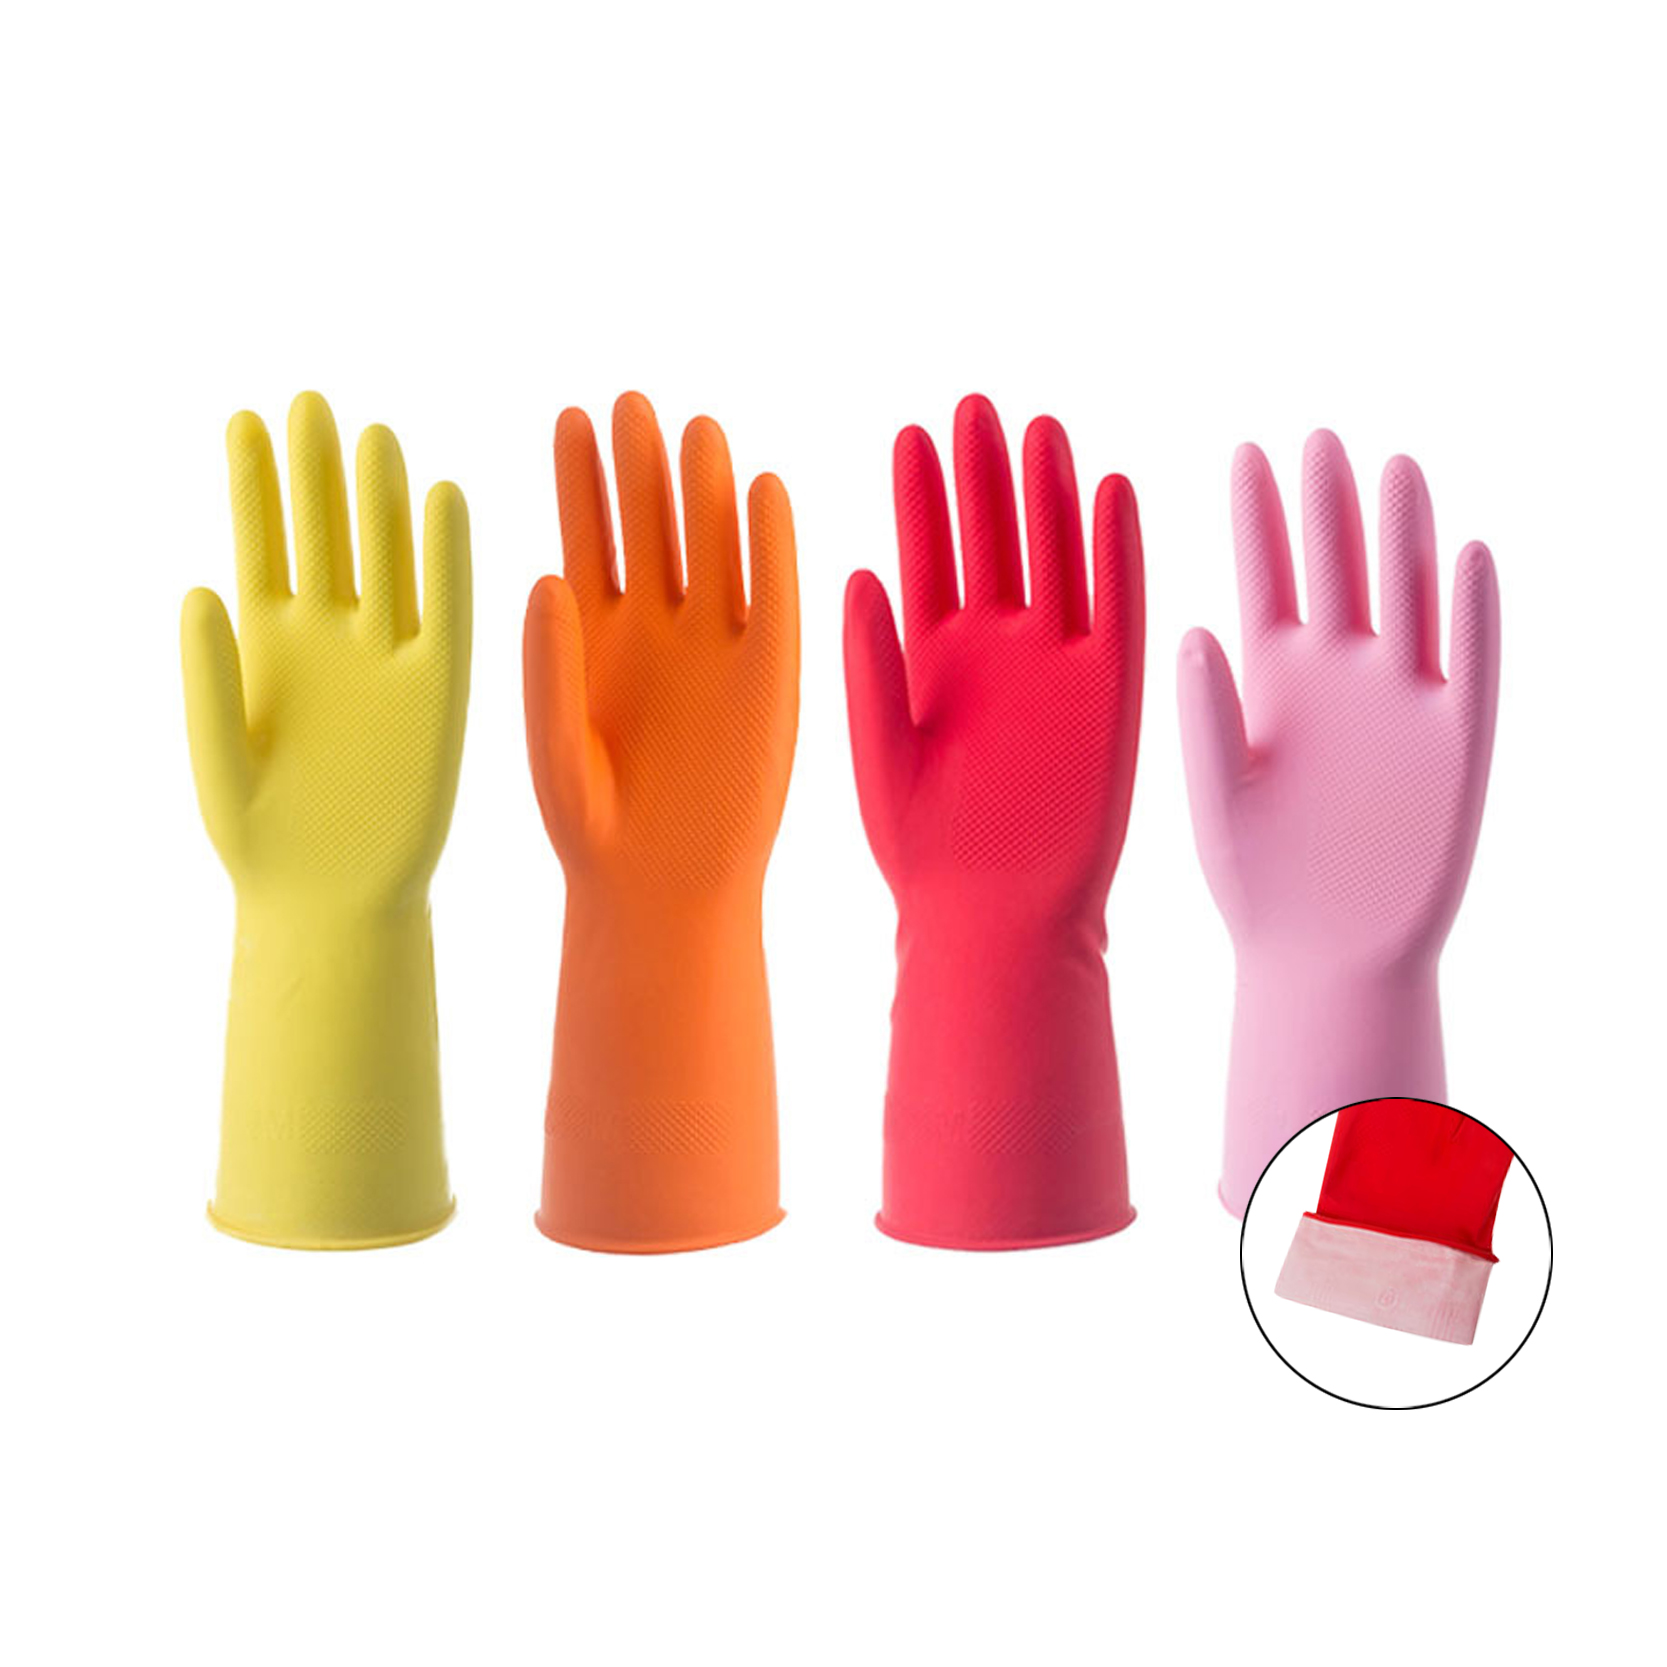 Purgatio Dish Gloves, Promissio Naturalis Flexilis Latex Dishwashing Gloves, Reusable Kitchen Dishwasher Gloves